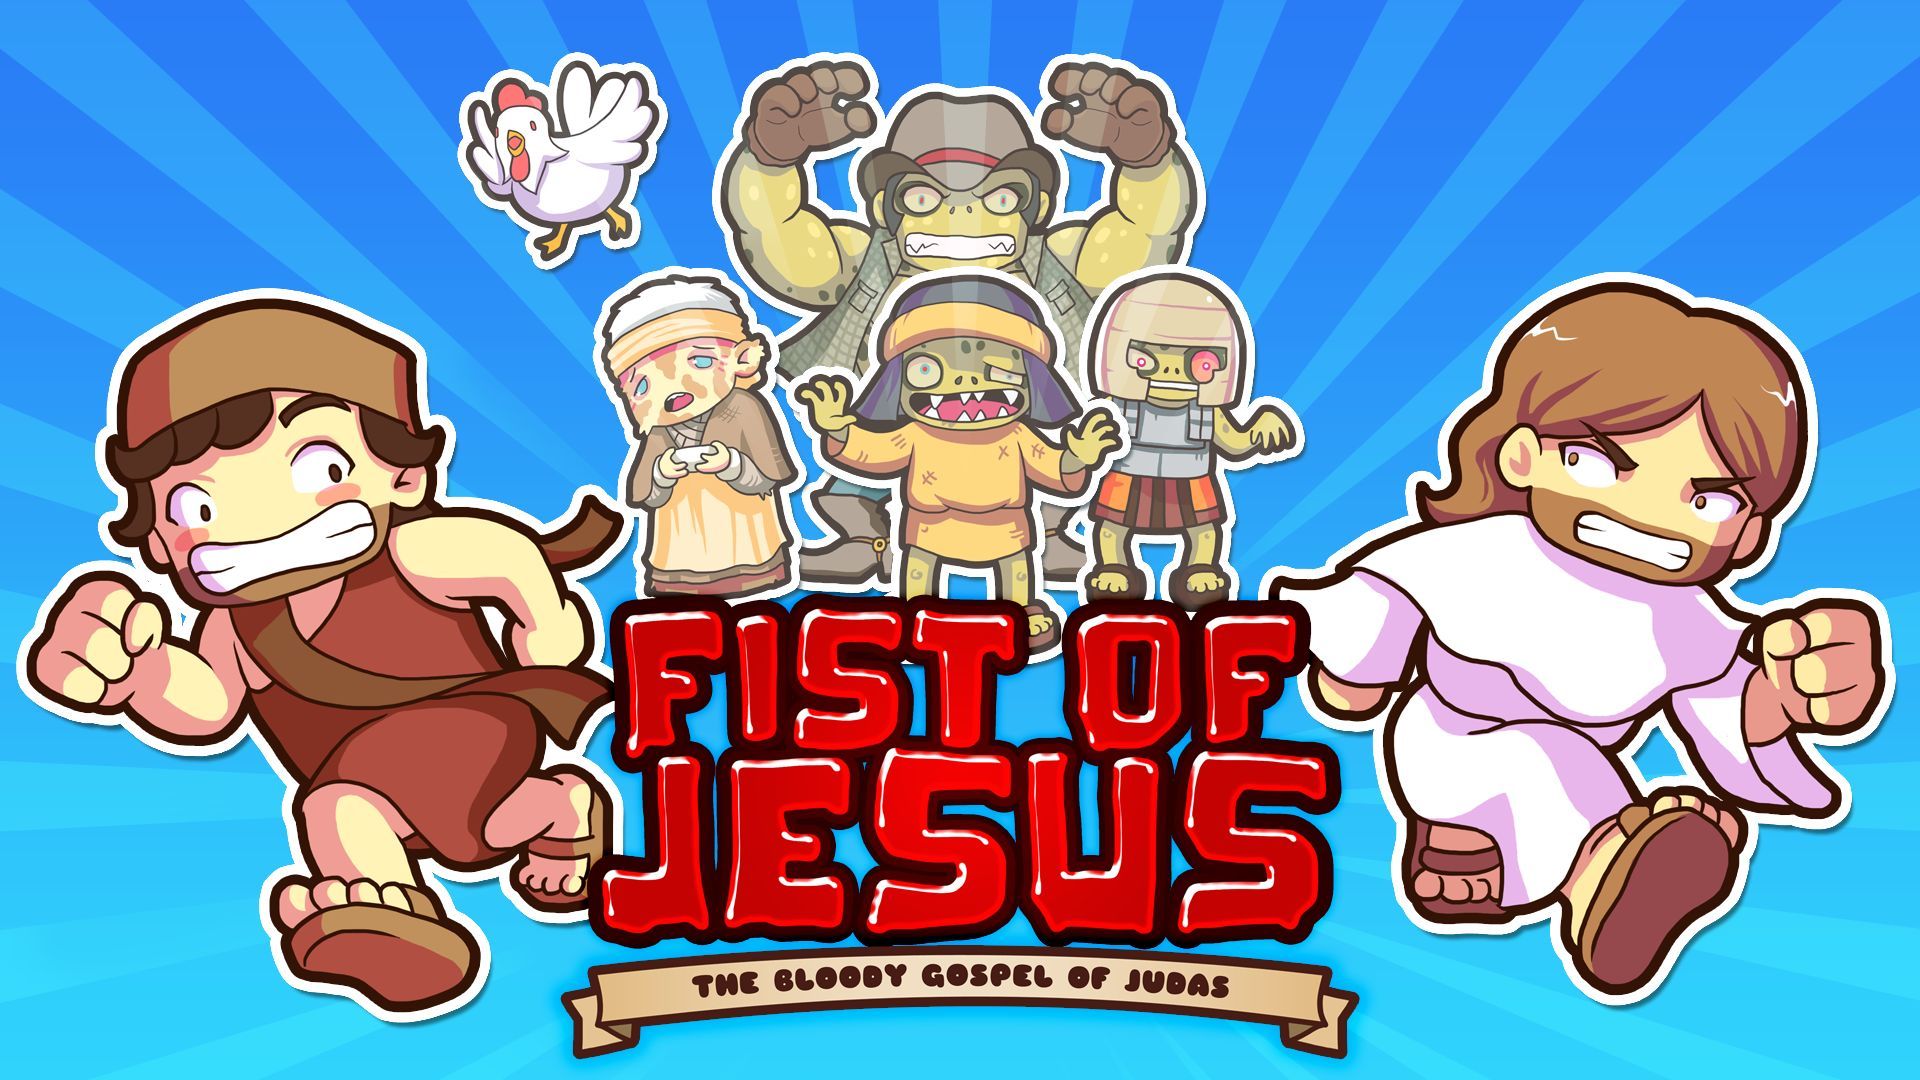 Fist Of Jesus Backgrounds, Compatible - PC, Mobile, Gadgets| 1920x1080 px